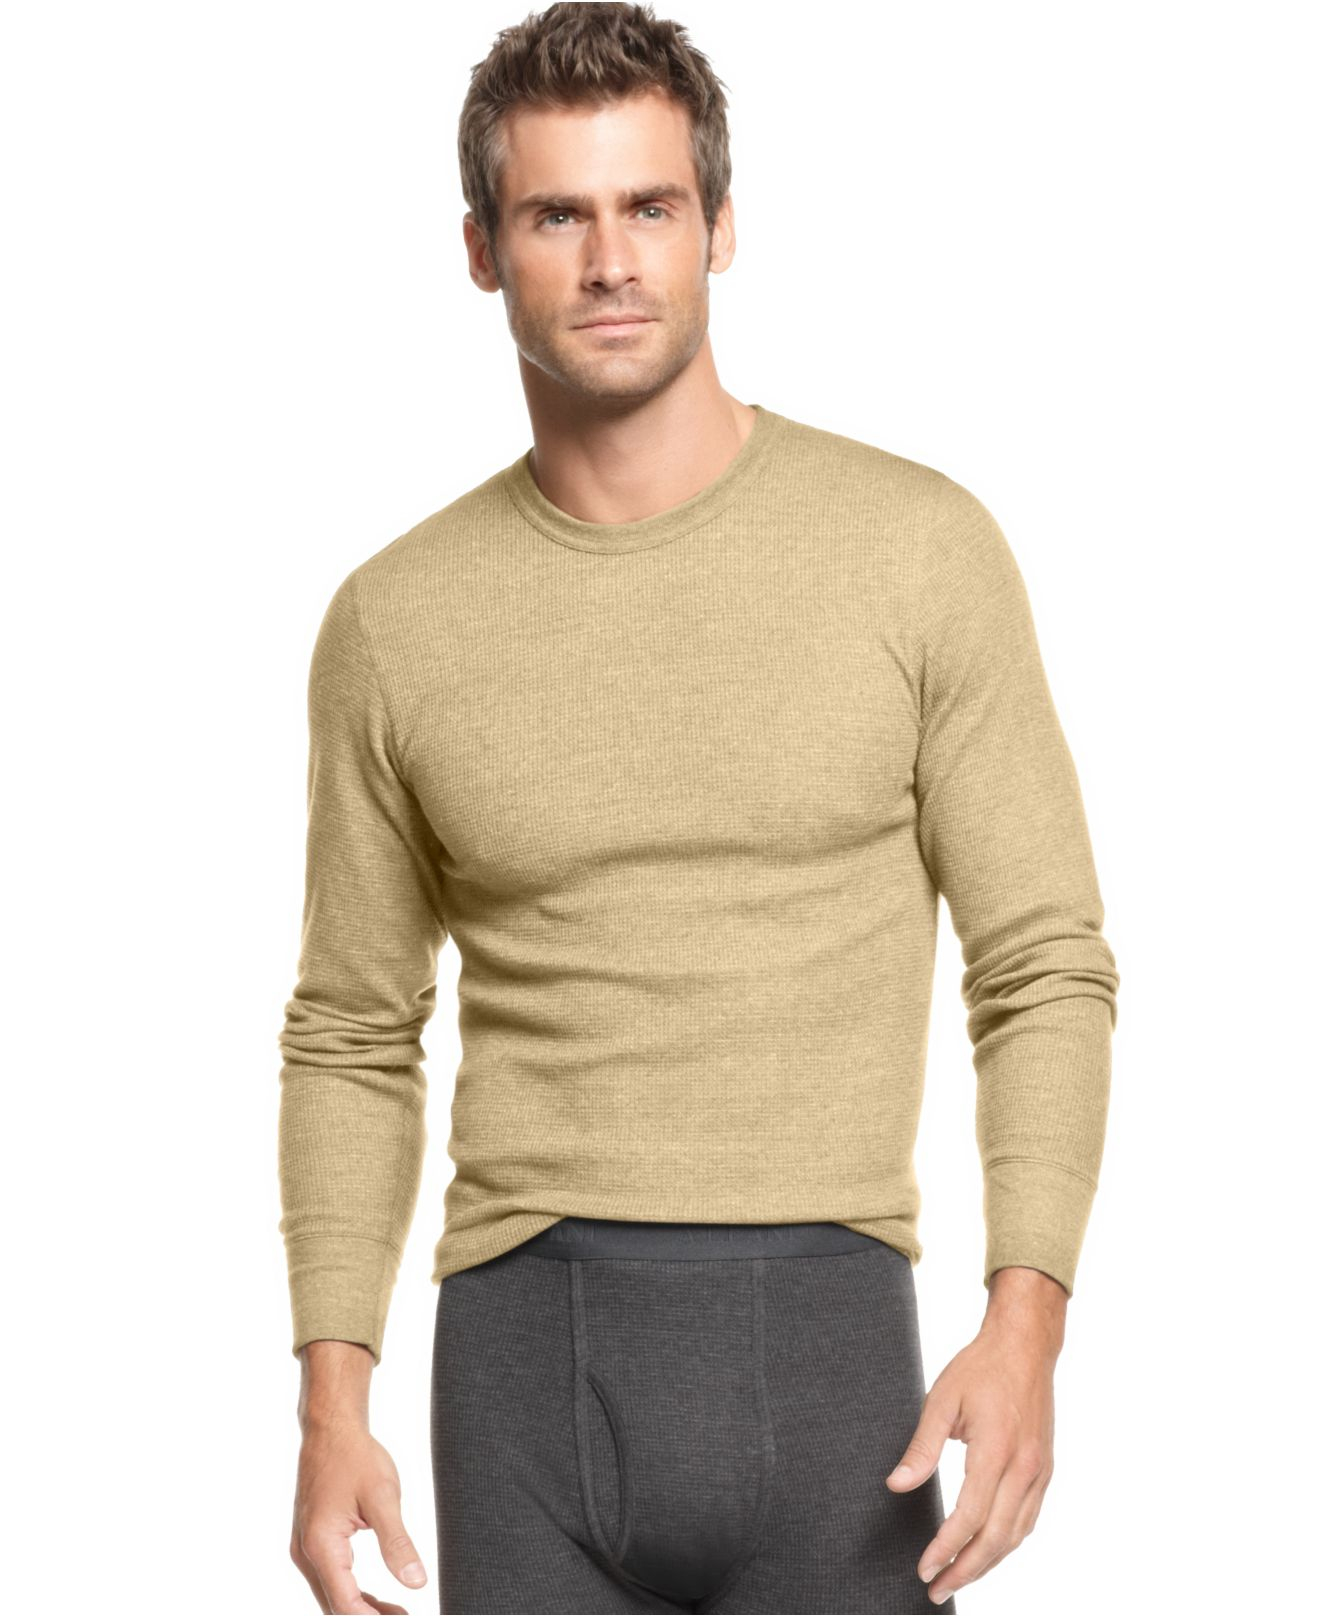 Mens Tall Long Sleeve T Shirts / Carhartt Men's Workwear Long Sleeve ... Tall Long Sleeve T Shirts Mens